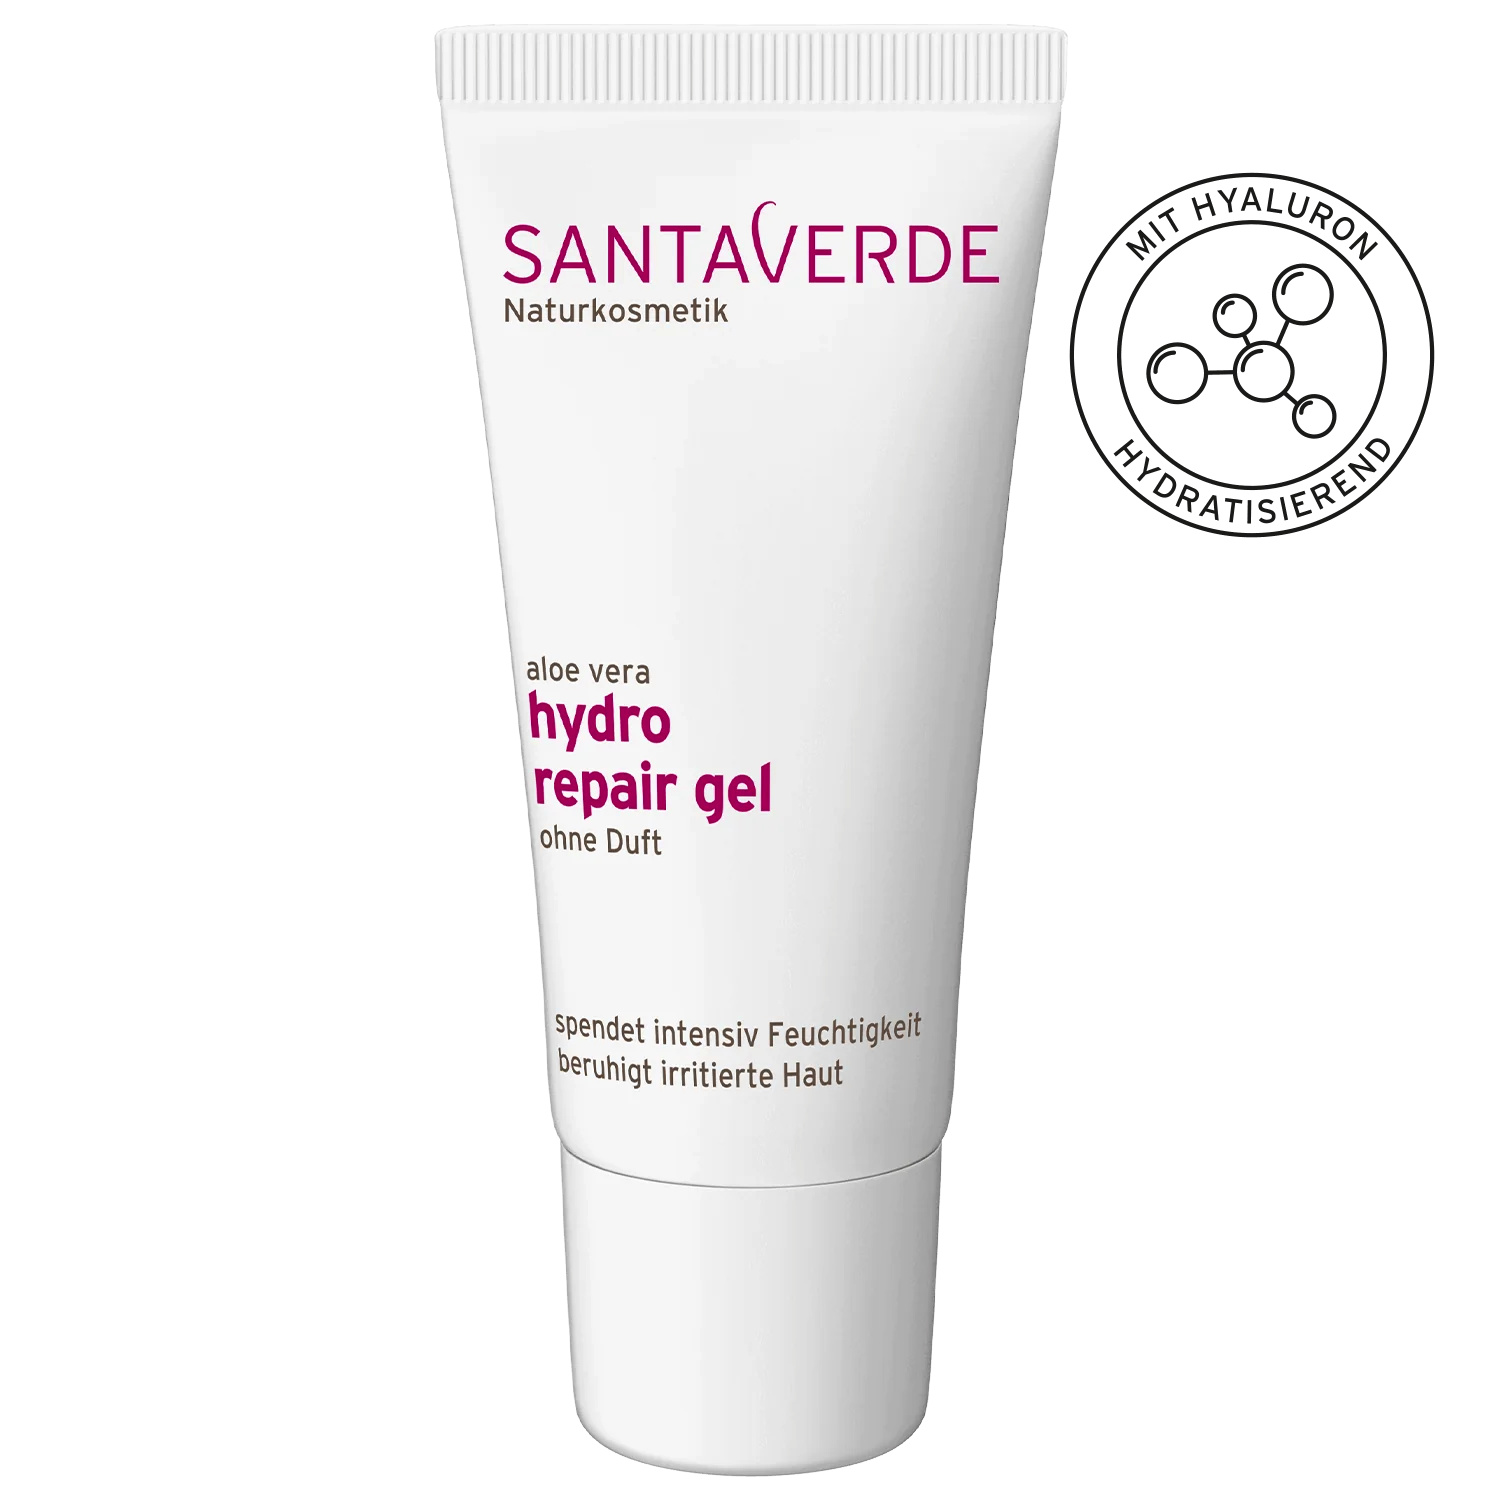 Santaverde hydro repair gel | 30 ml | Aloe Vera & ohne Duft